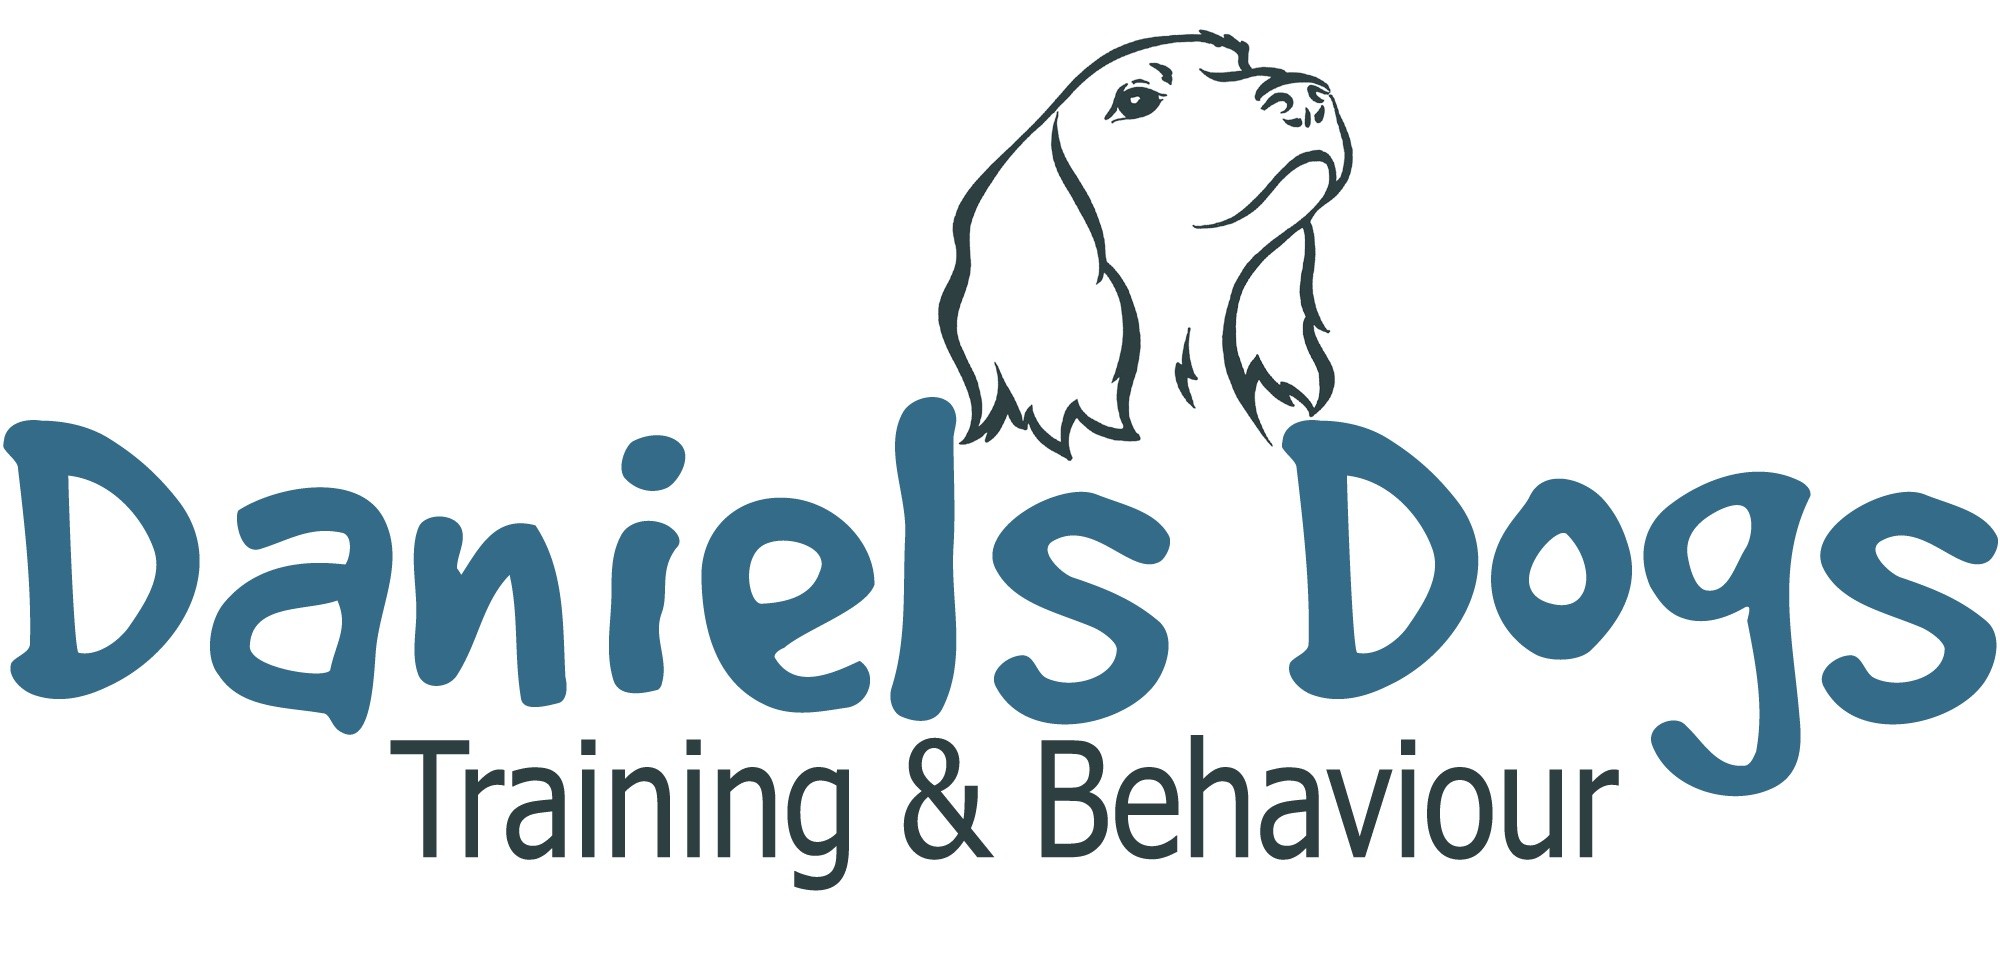 Daniel's dogs training & behaviour.